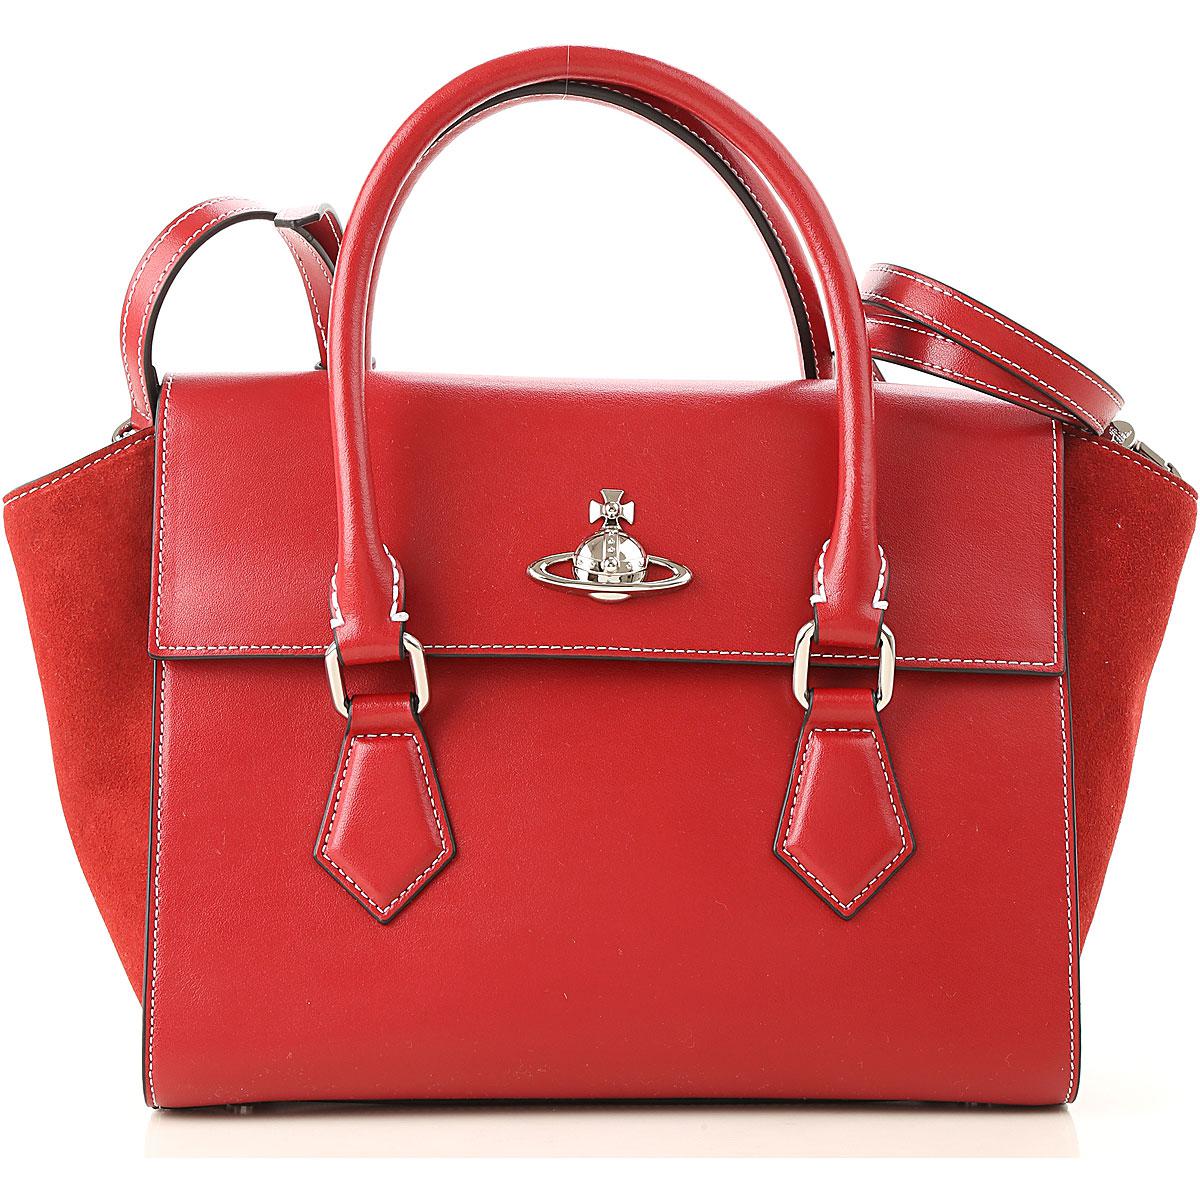 Vivienne Westwood Leather Handbags in Red - Lyst